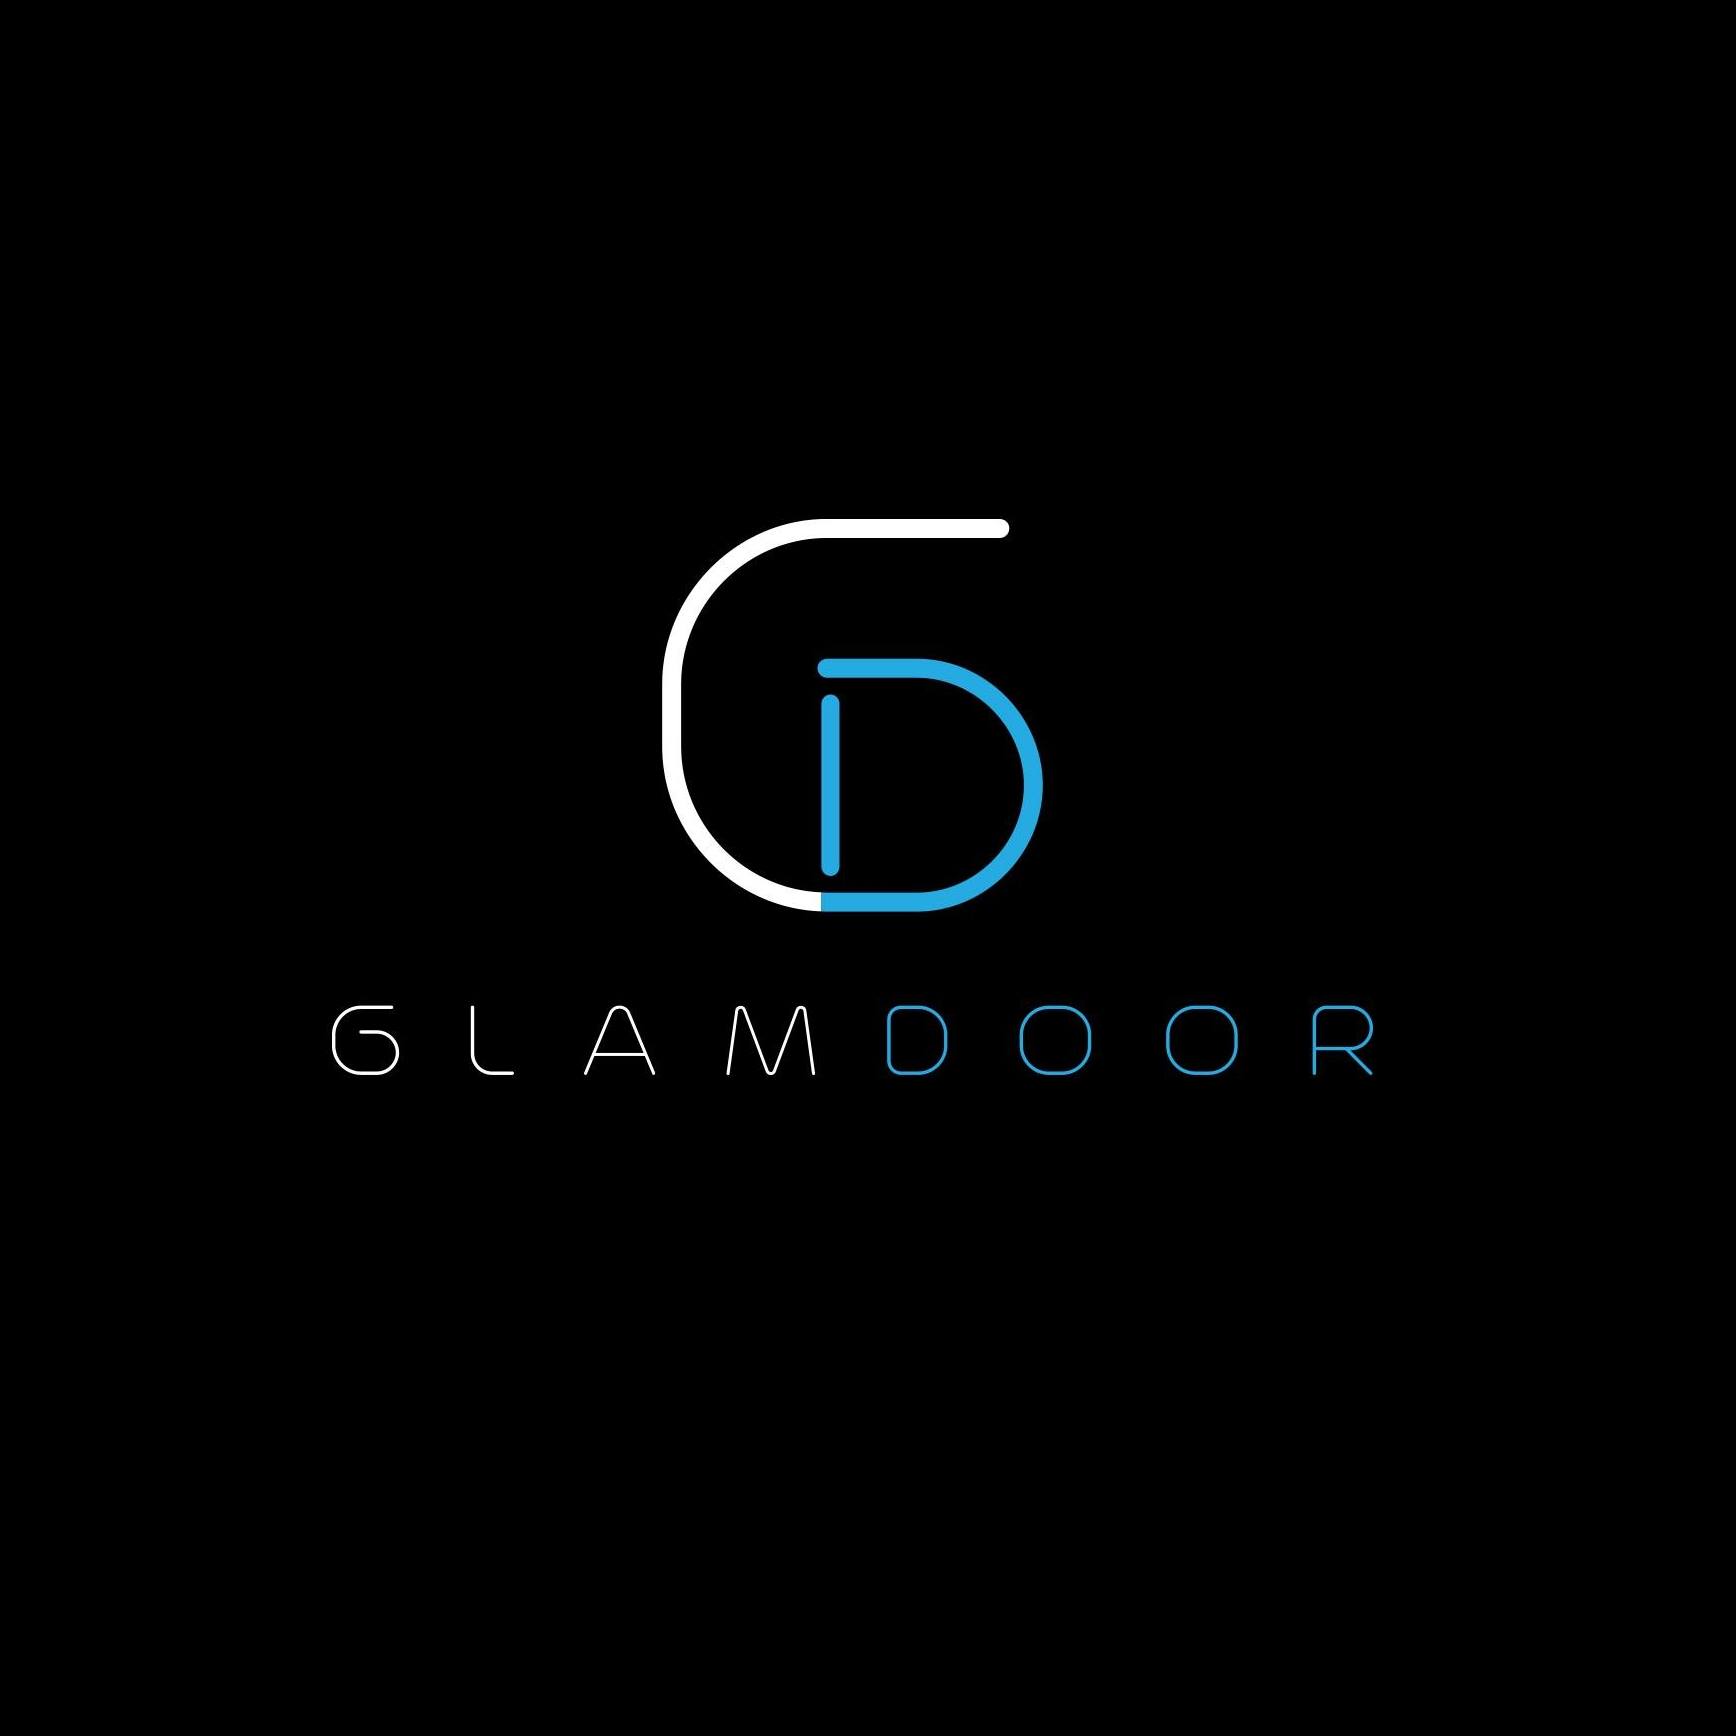 Glam Door Unisex Salon Logo